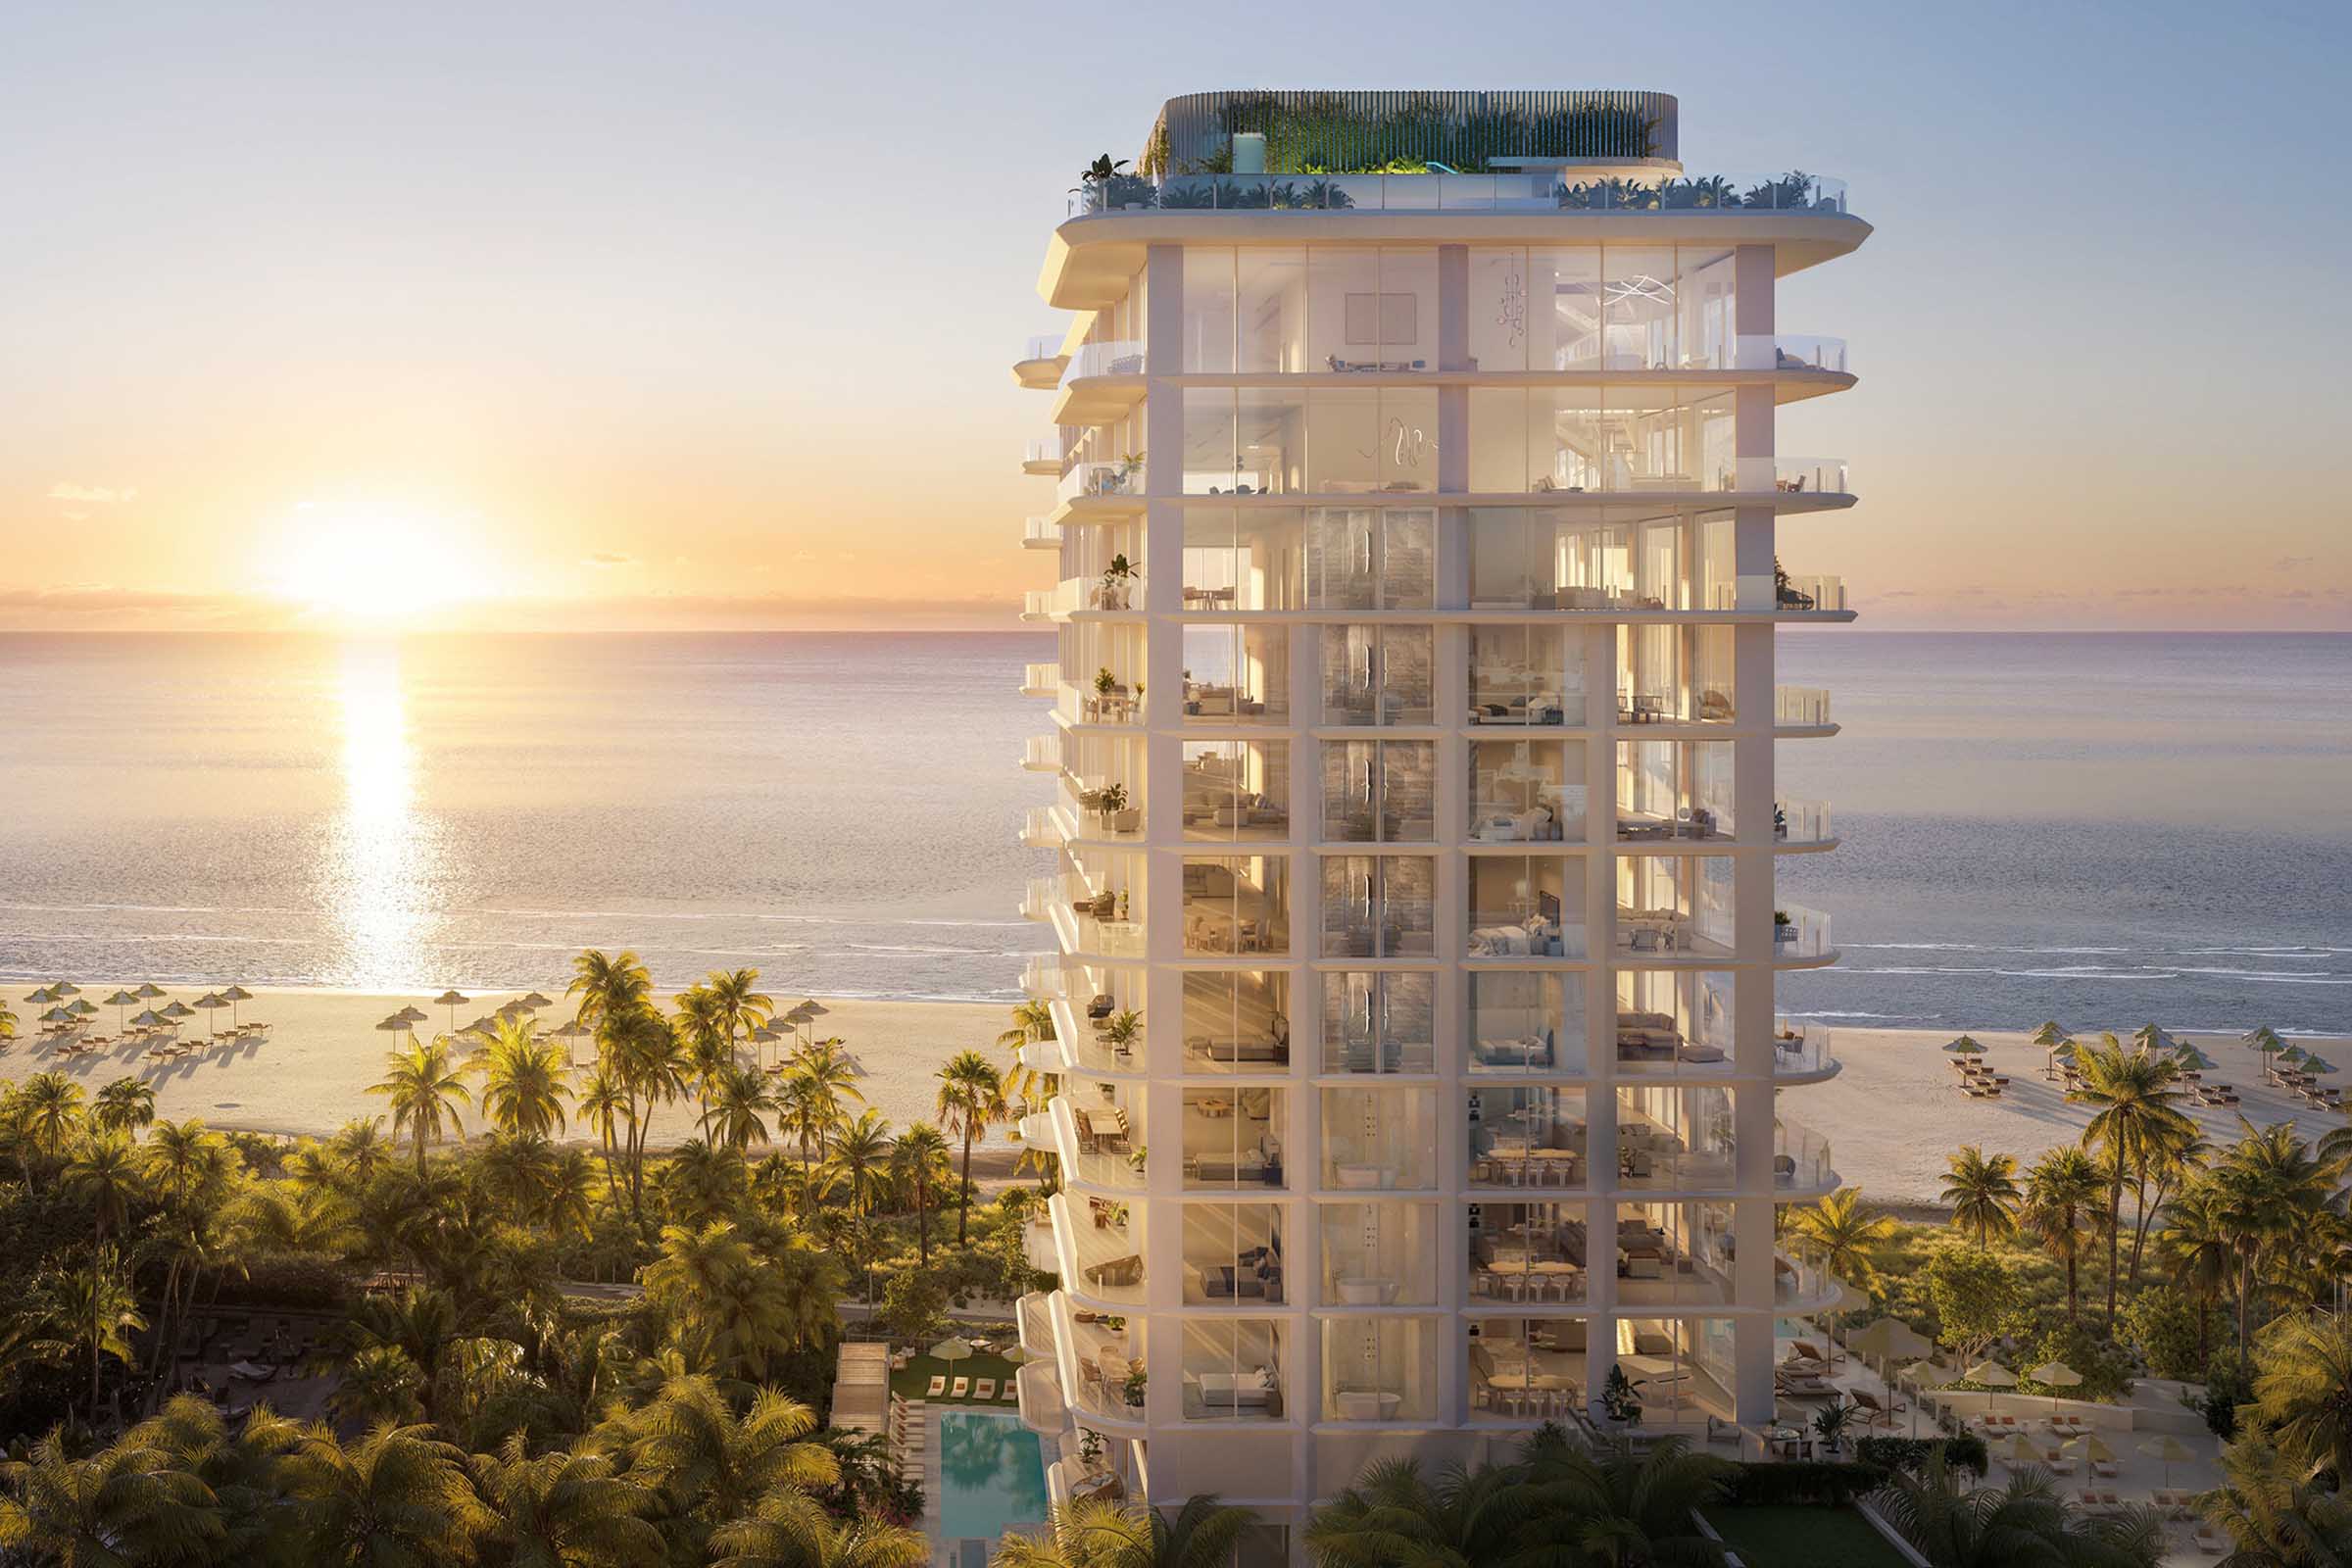 Rendering of the Ritz Carlton/Sagamore Miami Beach South Beach